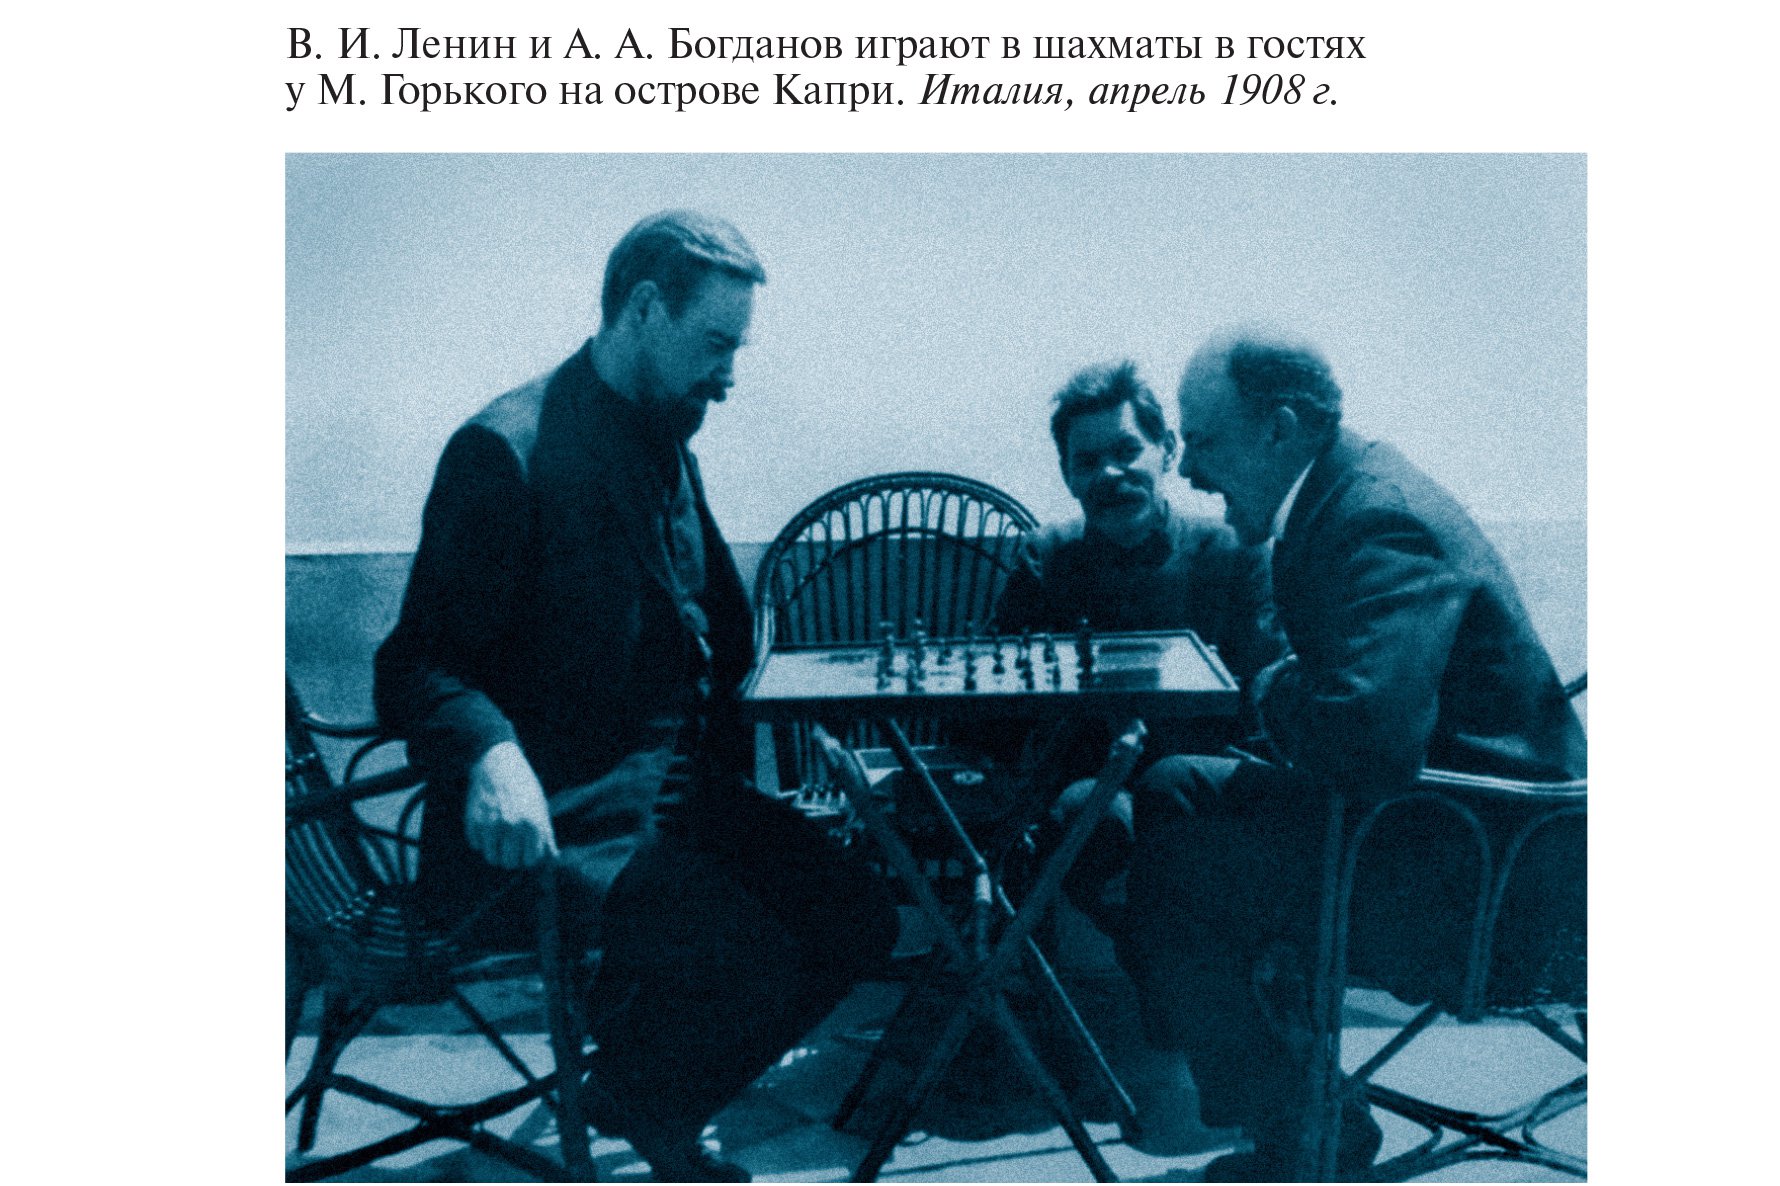 Максим Горький и Ленин на капри